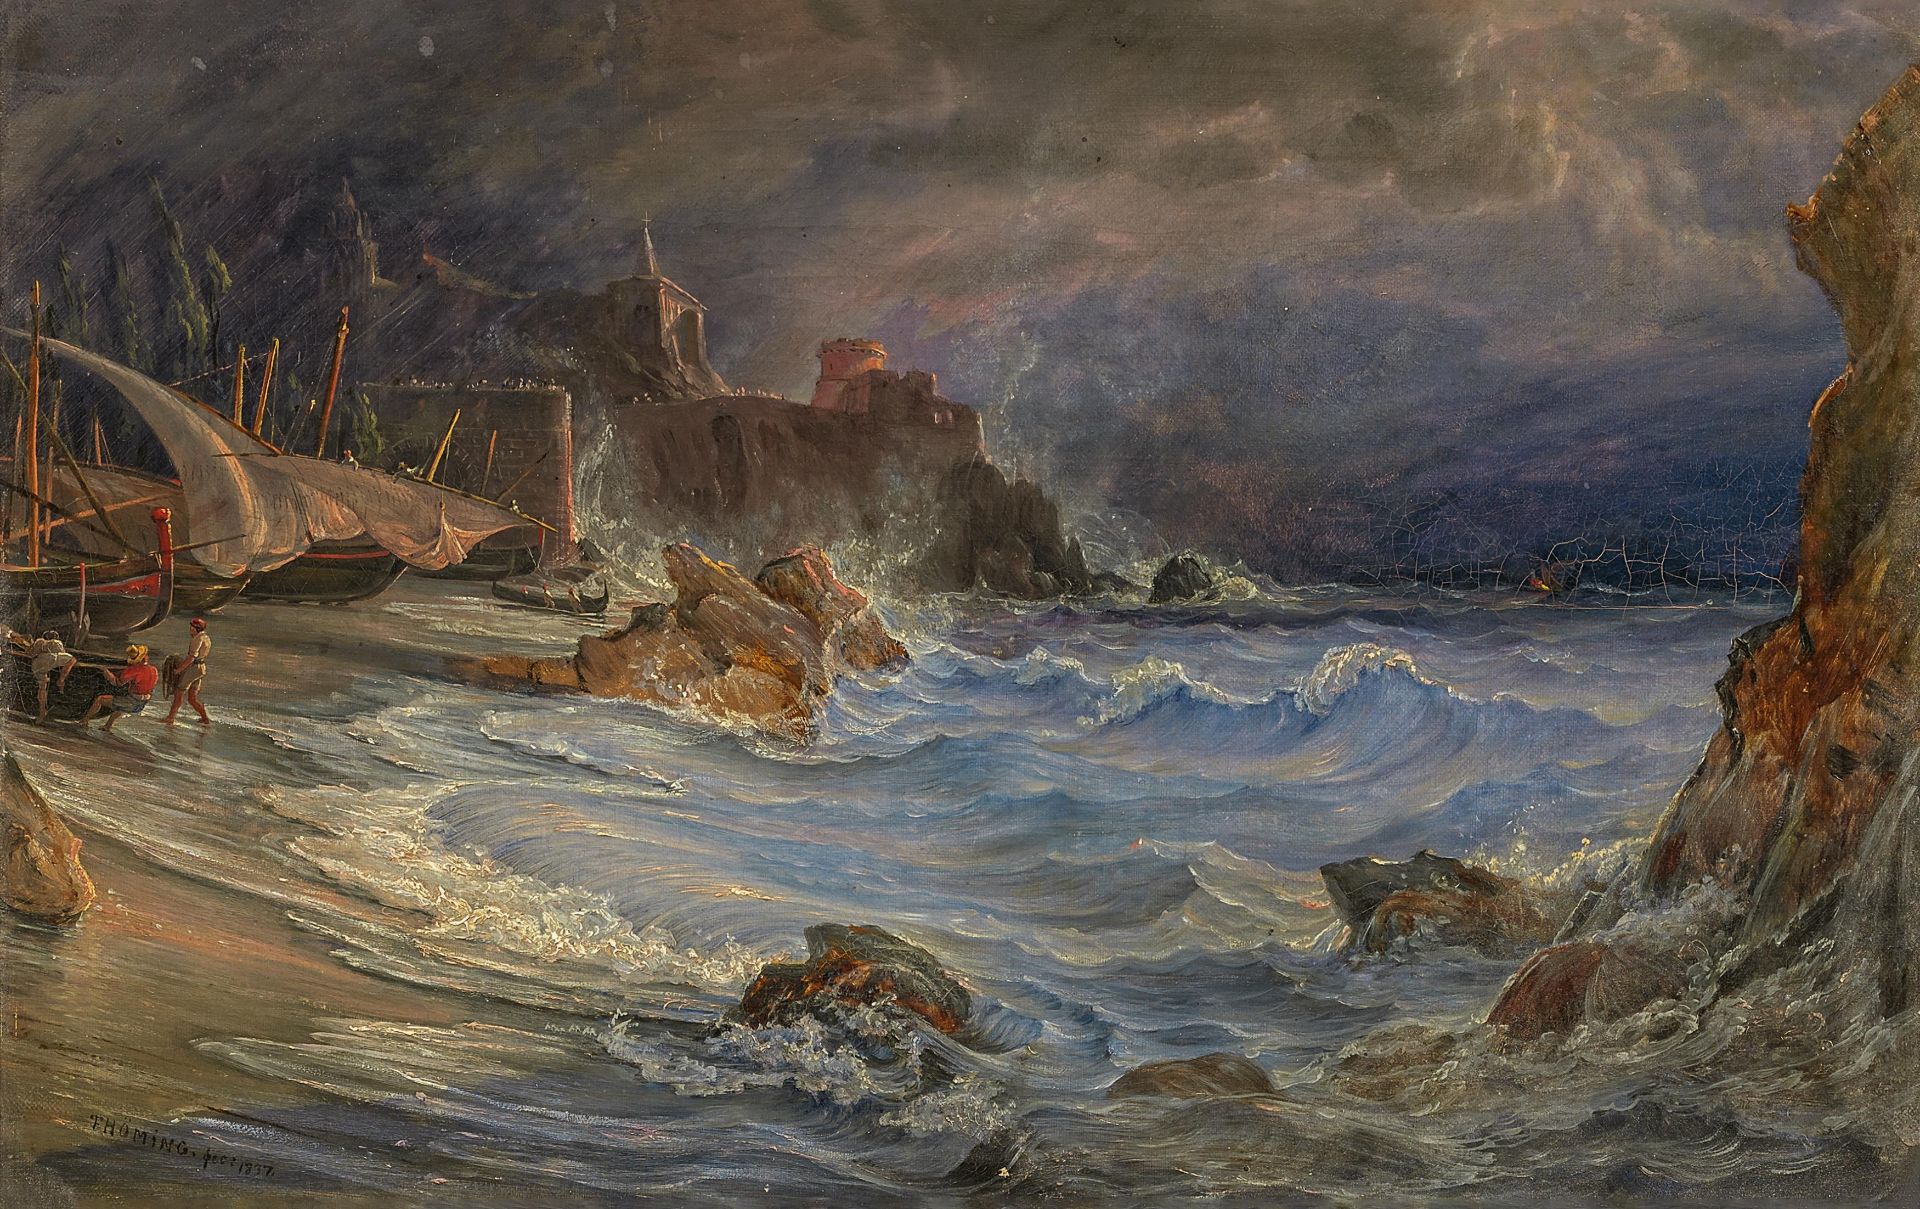 THÖMING, FRIEDRICH1802 Eckernförde - 1863 NaplesTitle: Thunderstorm at the Coast. Fishermen